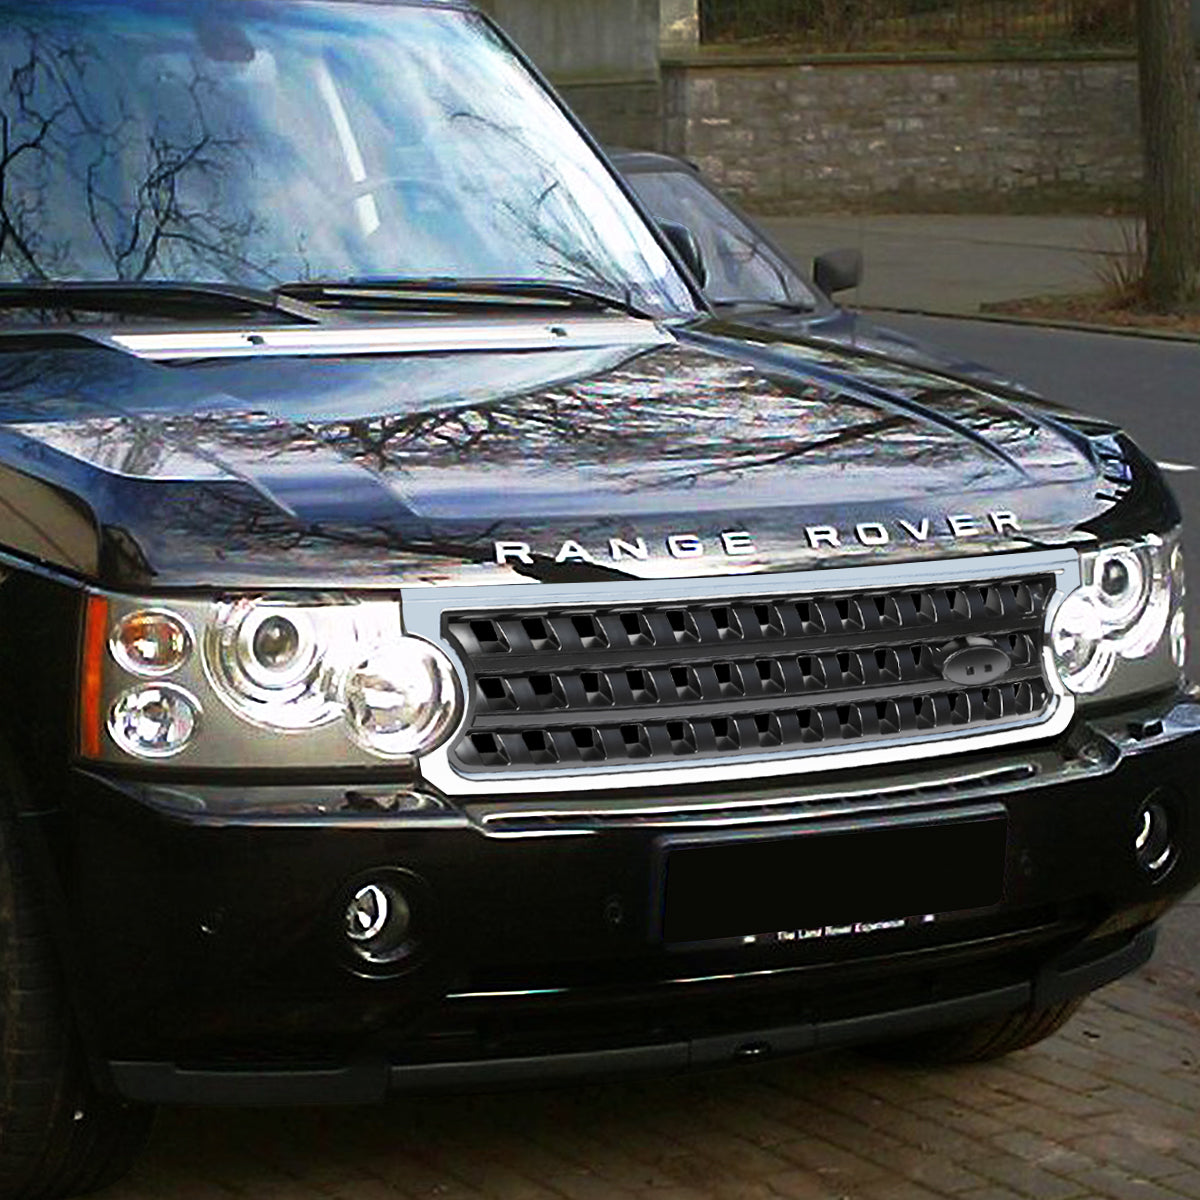 06-09 Land Rover Range Rover Front Grille - Square Mesh - Chrome/Black